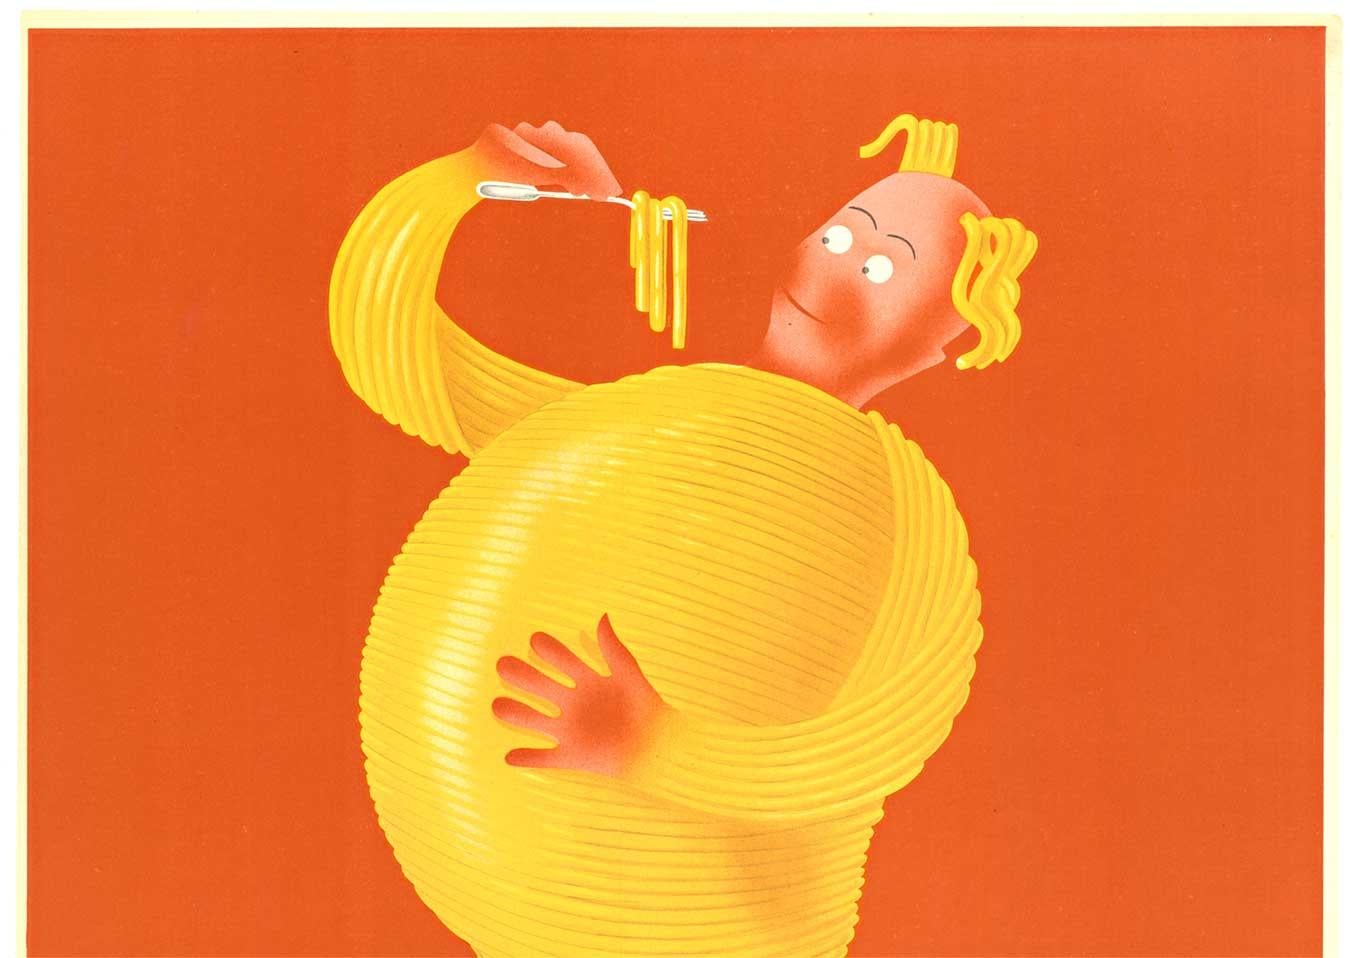 Original Perlach Maccaroni - Spaghetti-Vintage-Poster  Nudeln – Print von Richard Roth